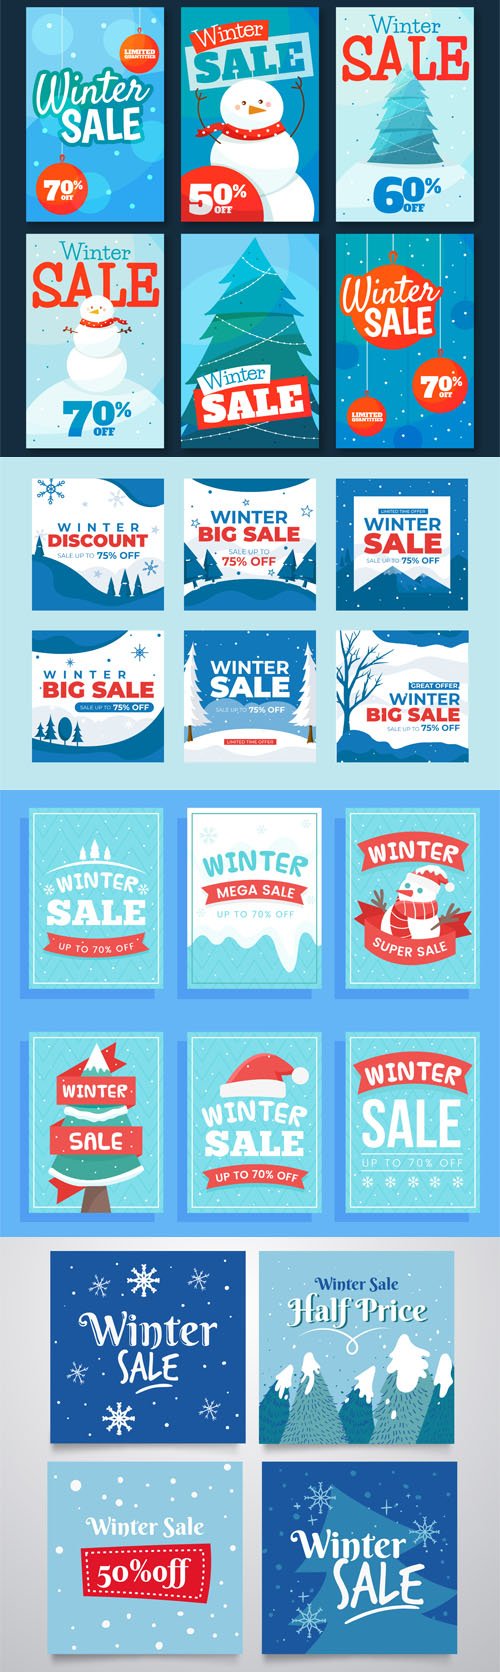 Creative Winter Sales Social Media Banners & Posts Vector Templates